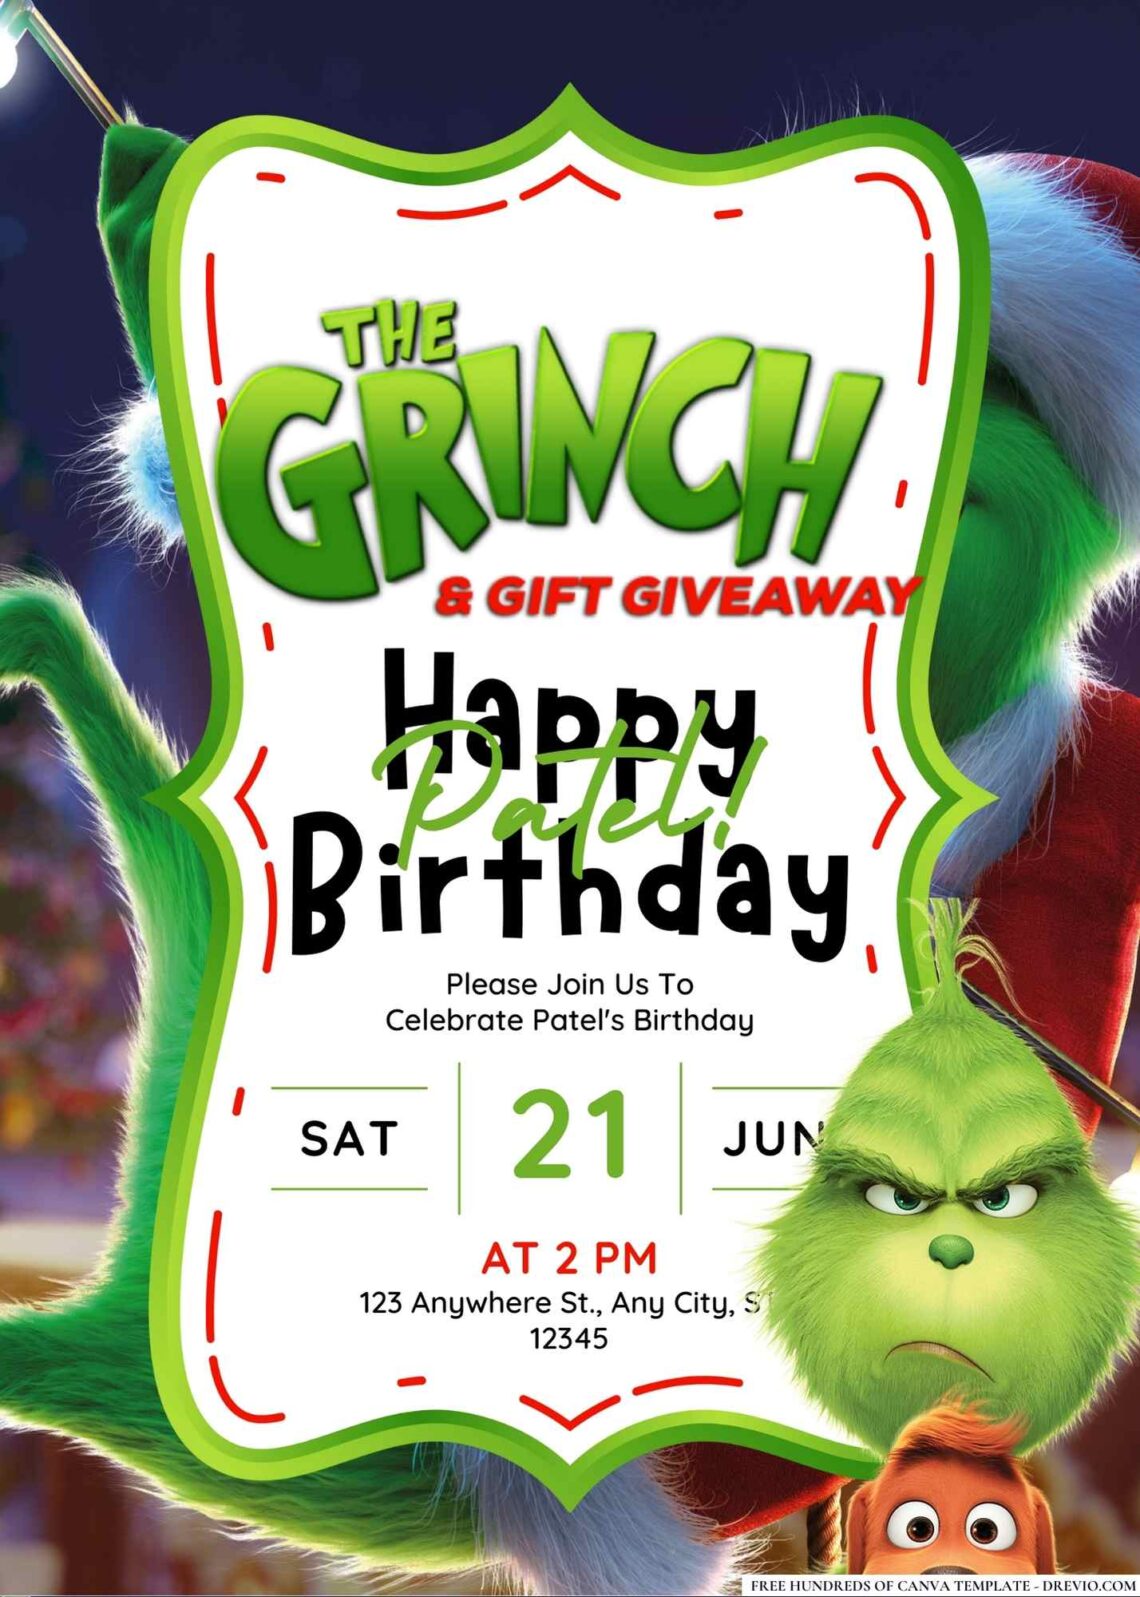 FREE Grinch Birthday Invitations